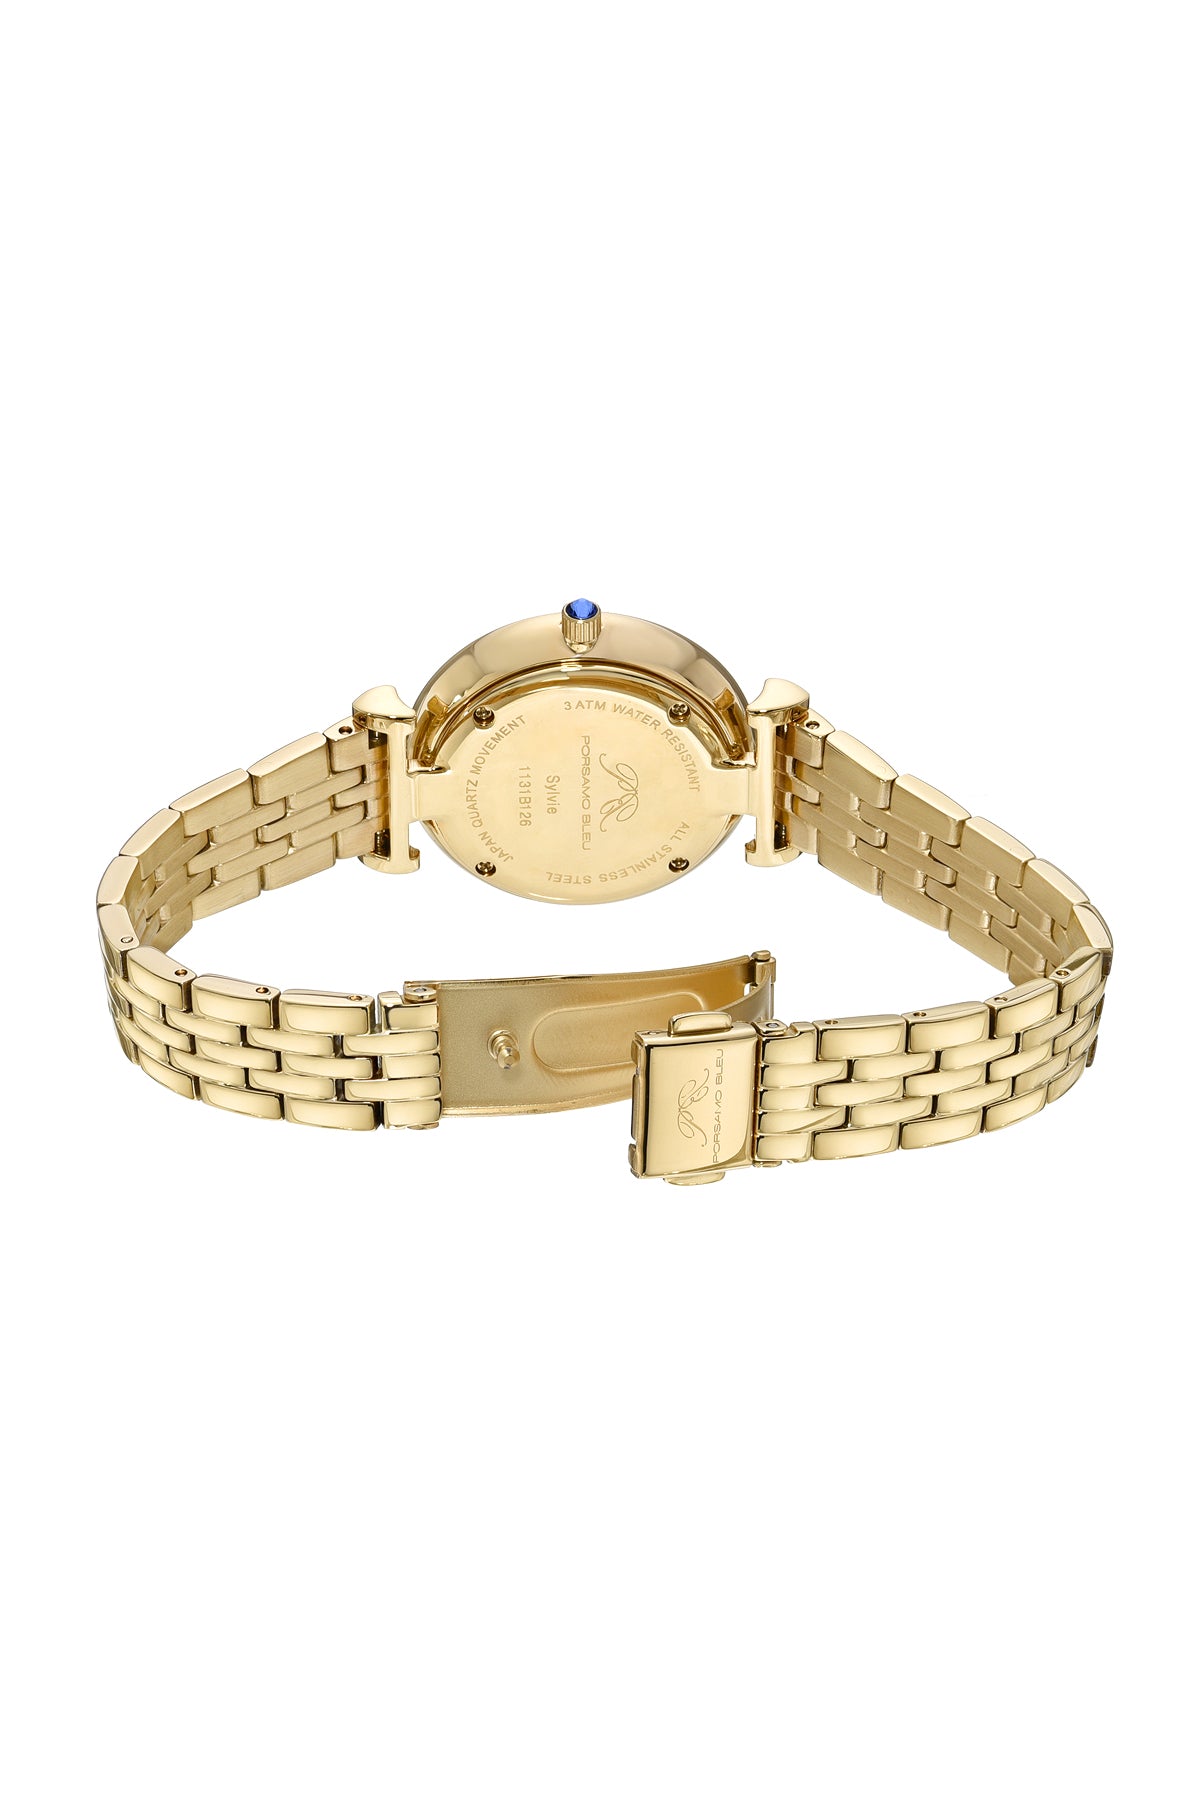 Porsamo Bleu Sylvie Luxury Women's Stainless Steel Watch, Gold, Abalone Dial 1131BSYS